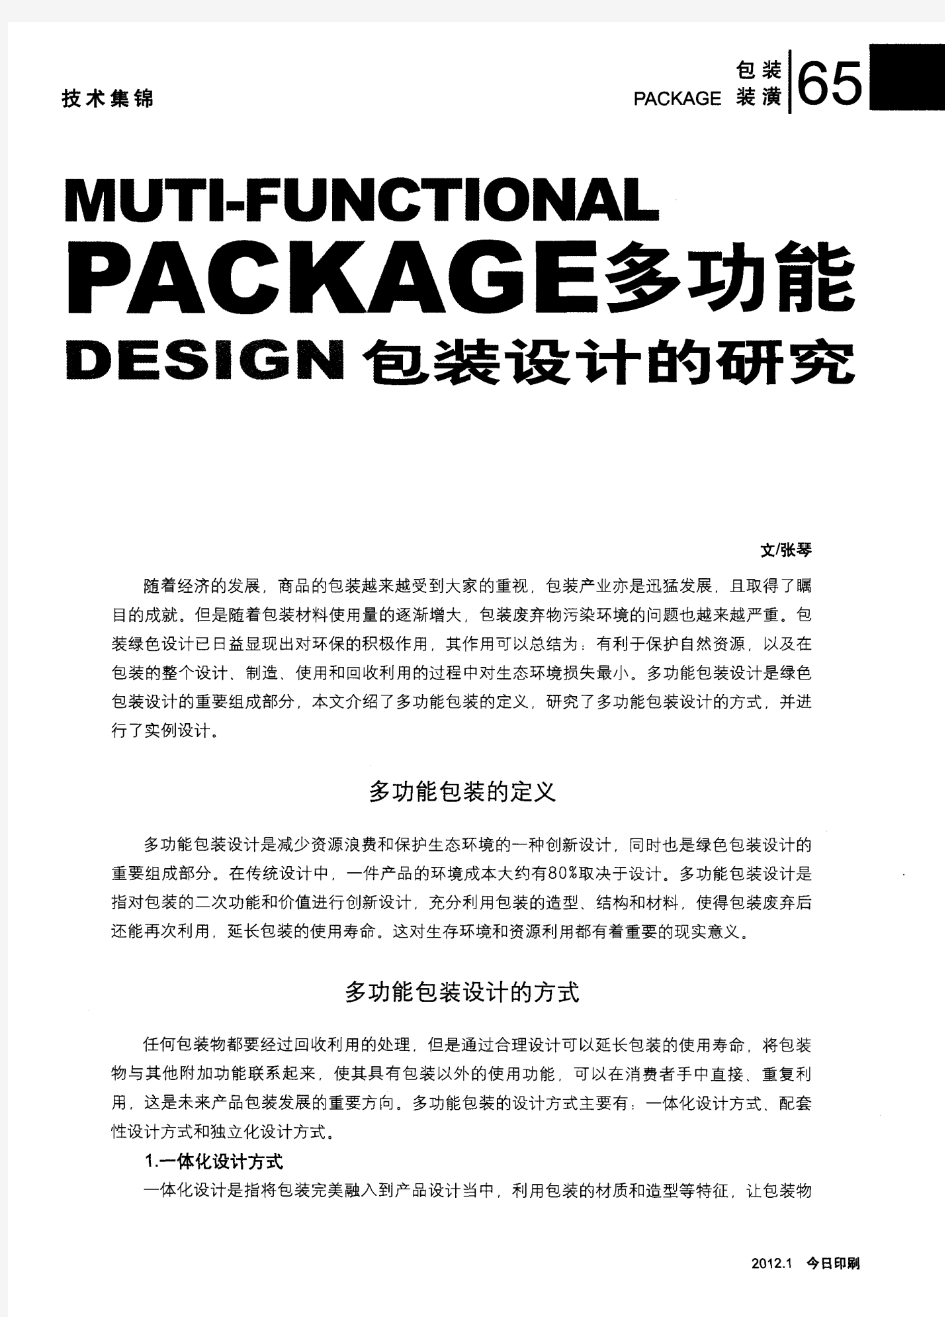 MUTI-FUNCTIONAL PACKAGE多功能DESIGN包装设计的研究